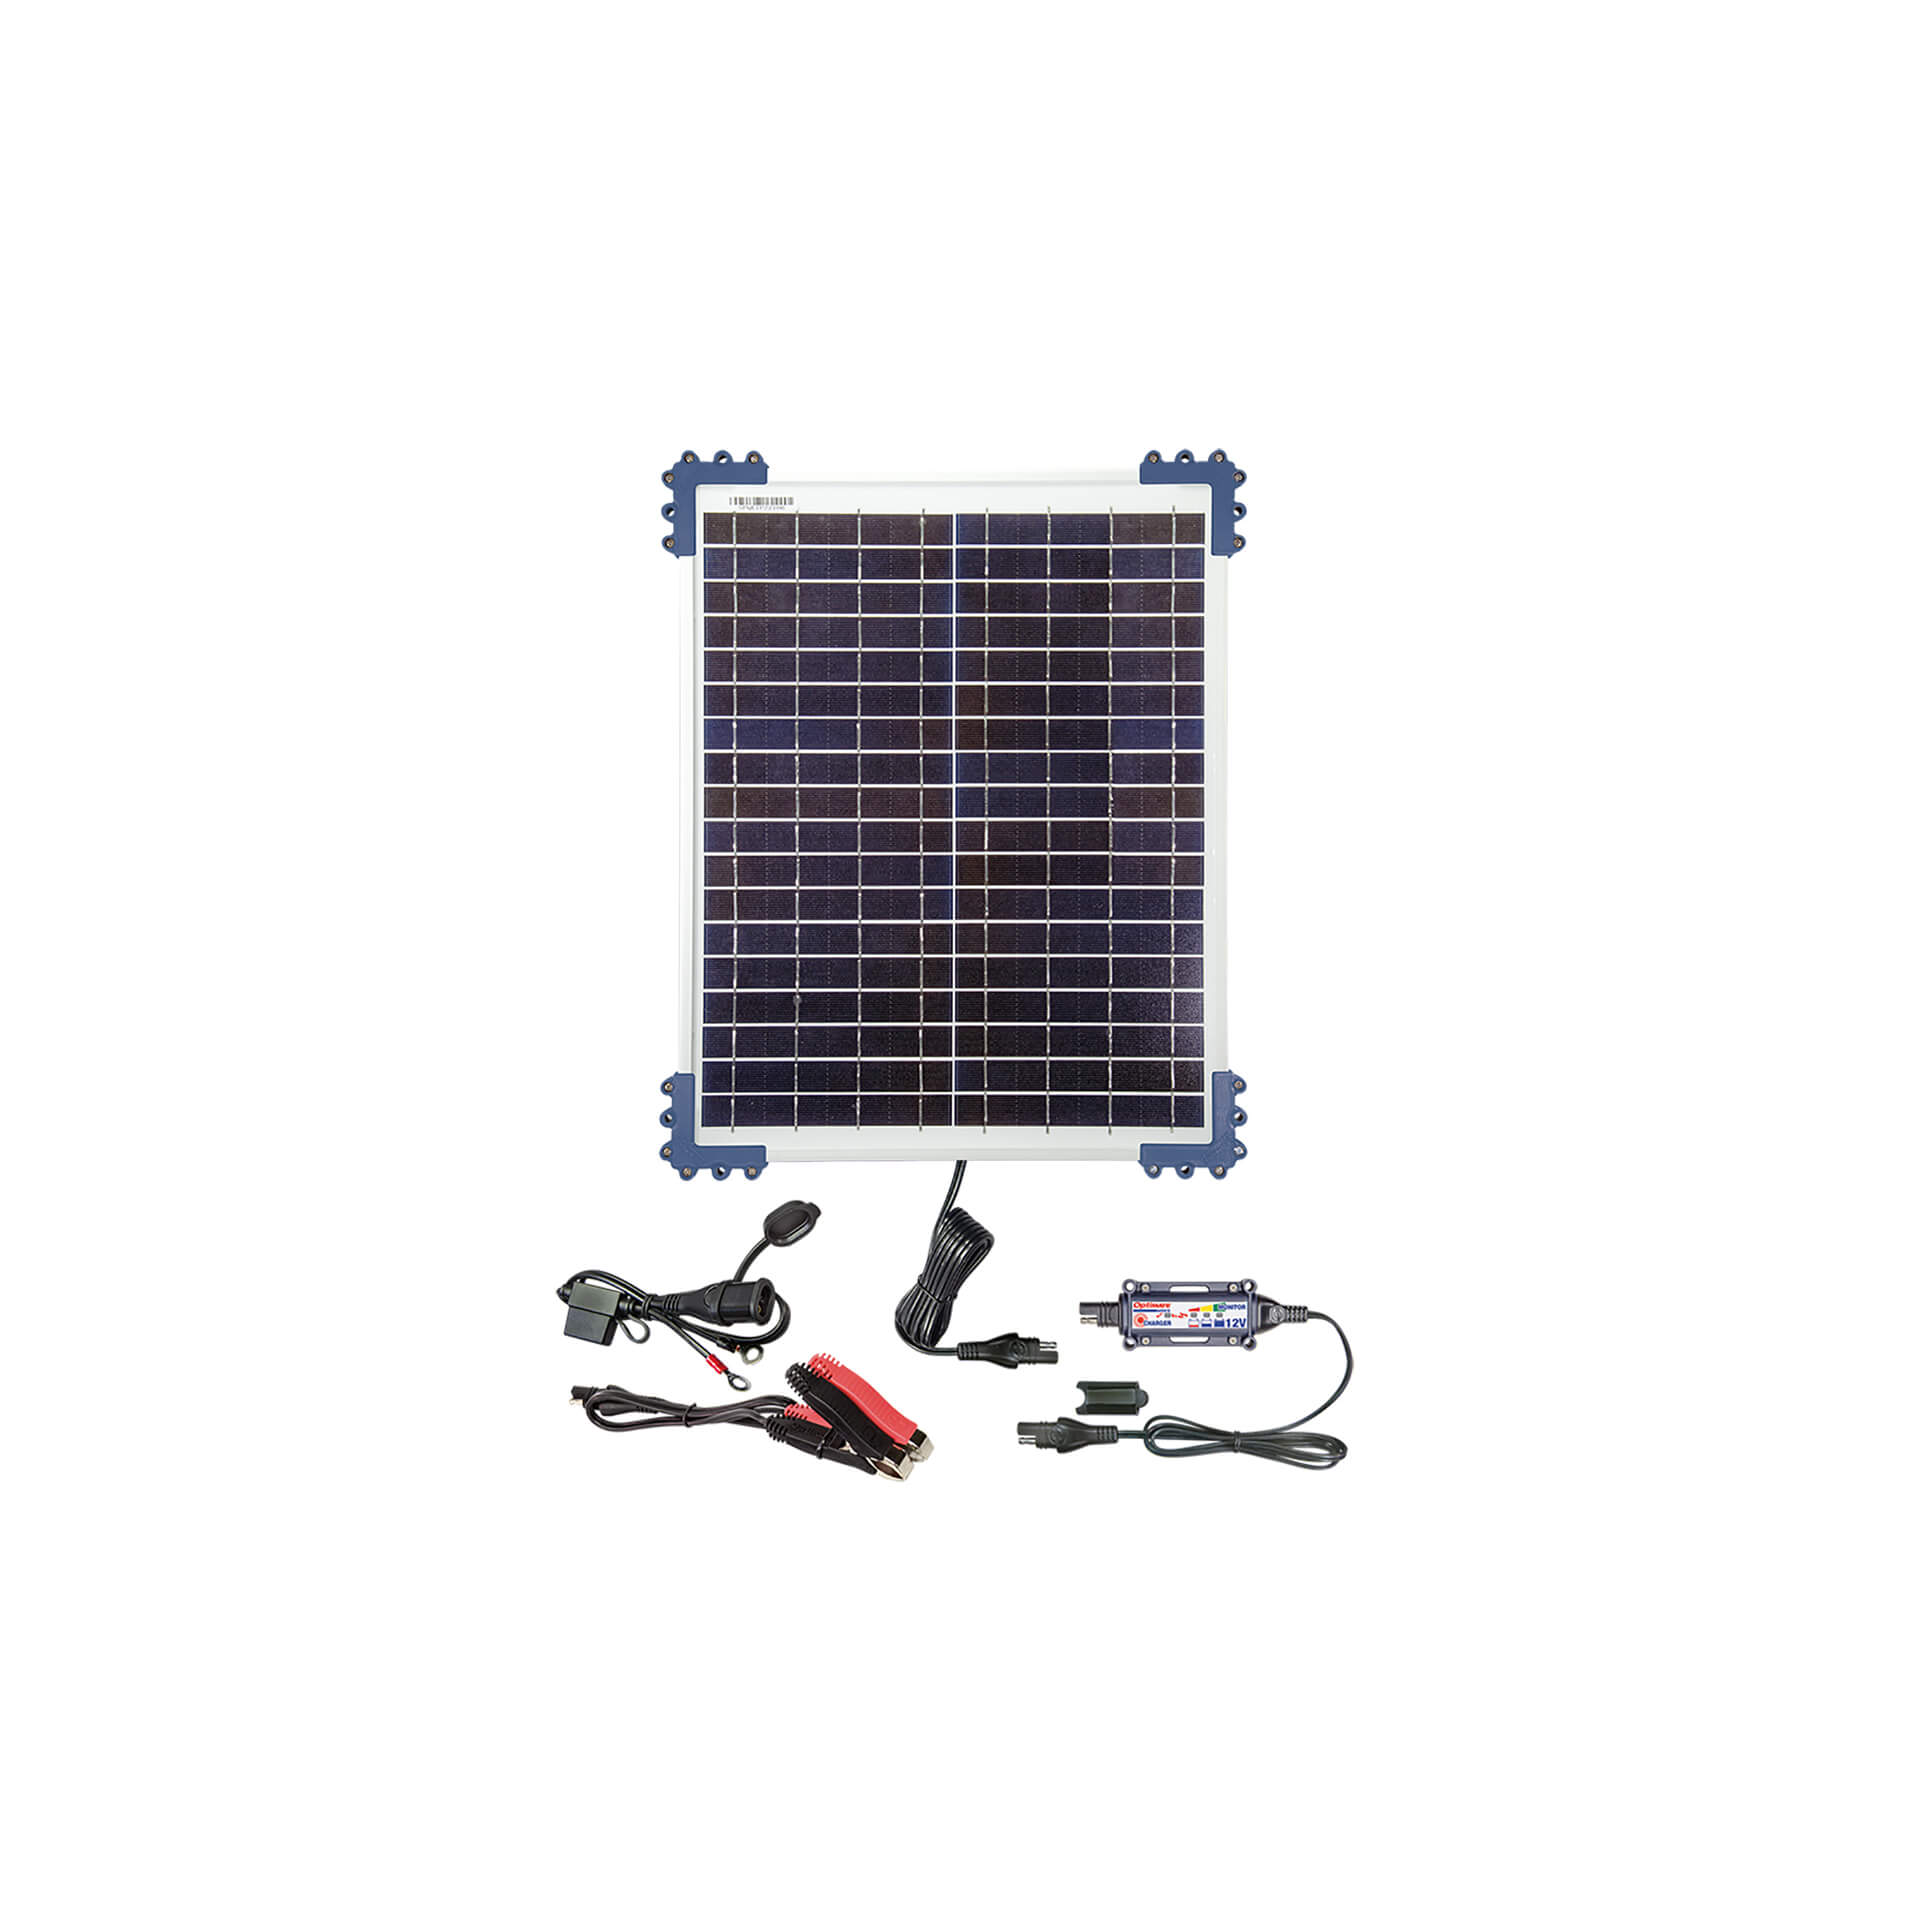 optimate Solar DUO Ladegerät 20 Watt für Blei/GEL/AGM/LFP